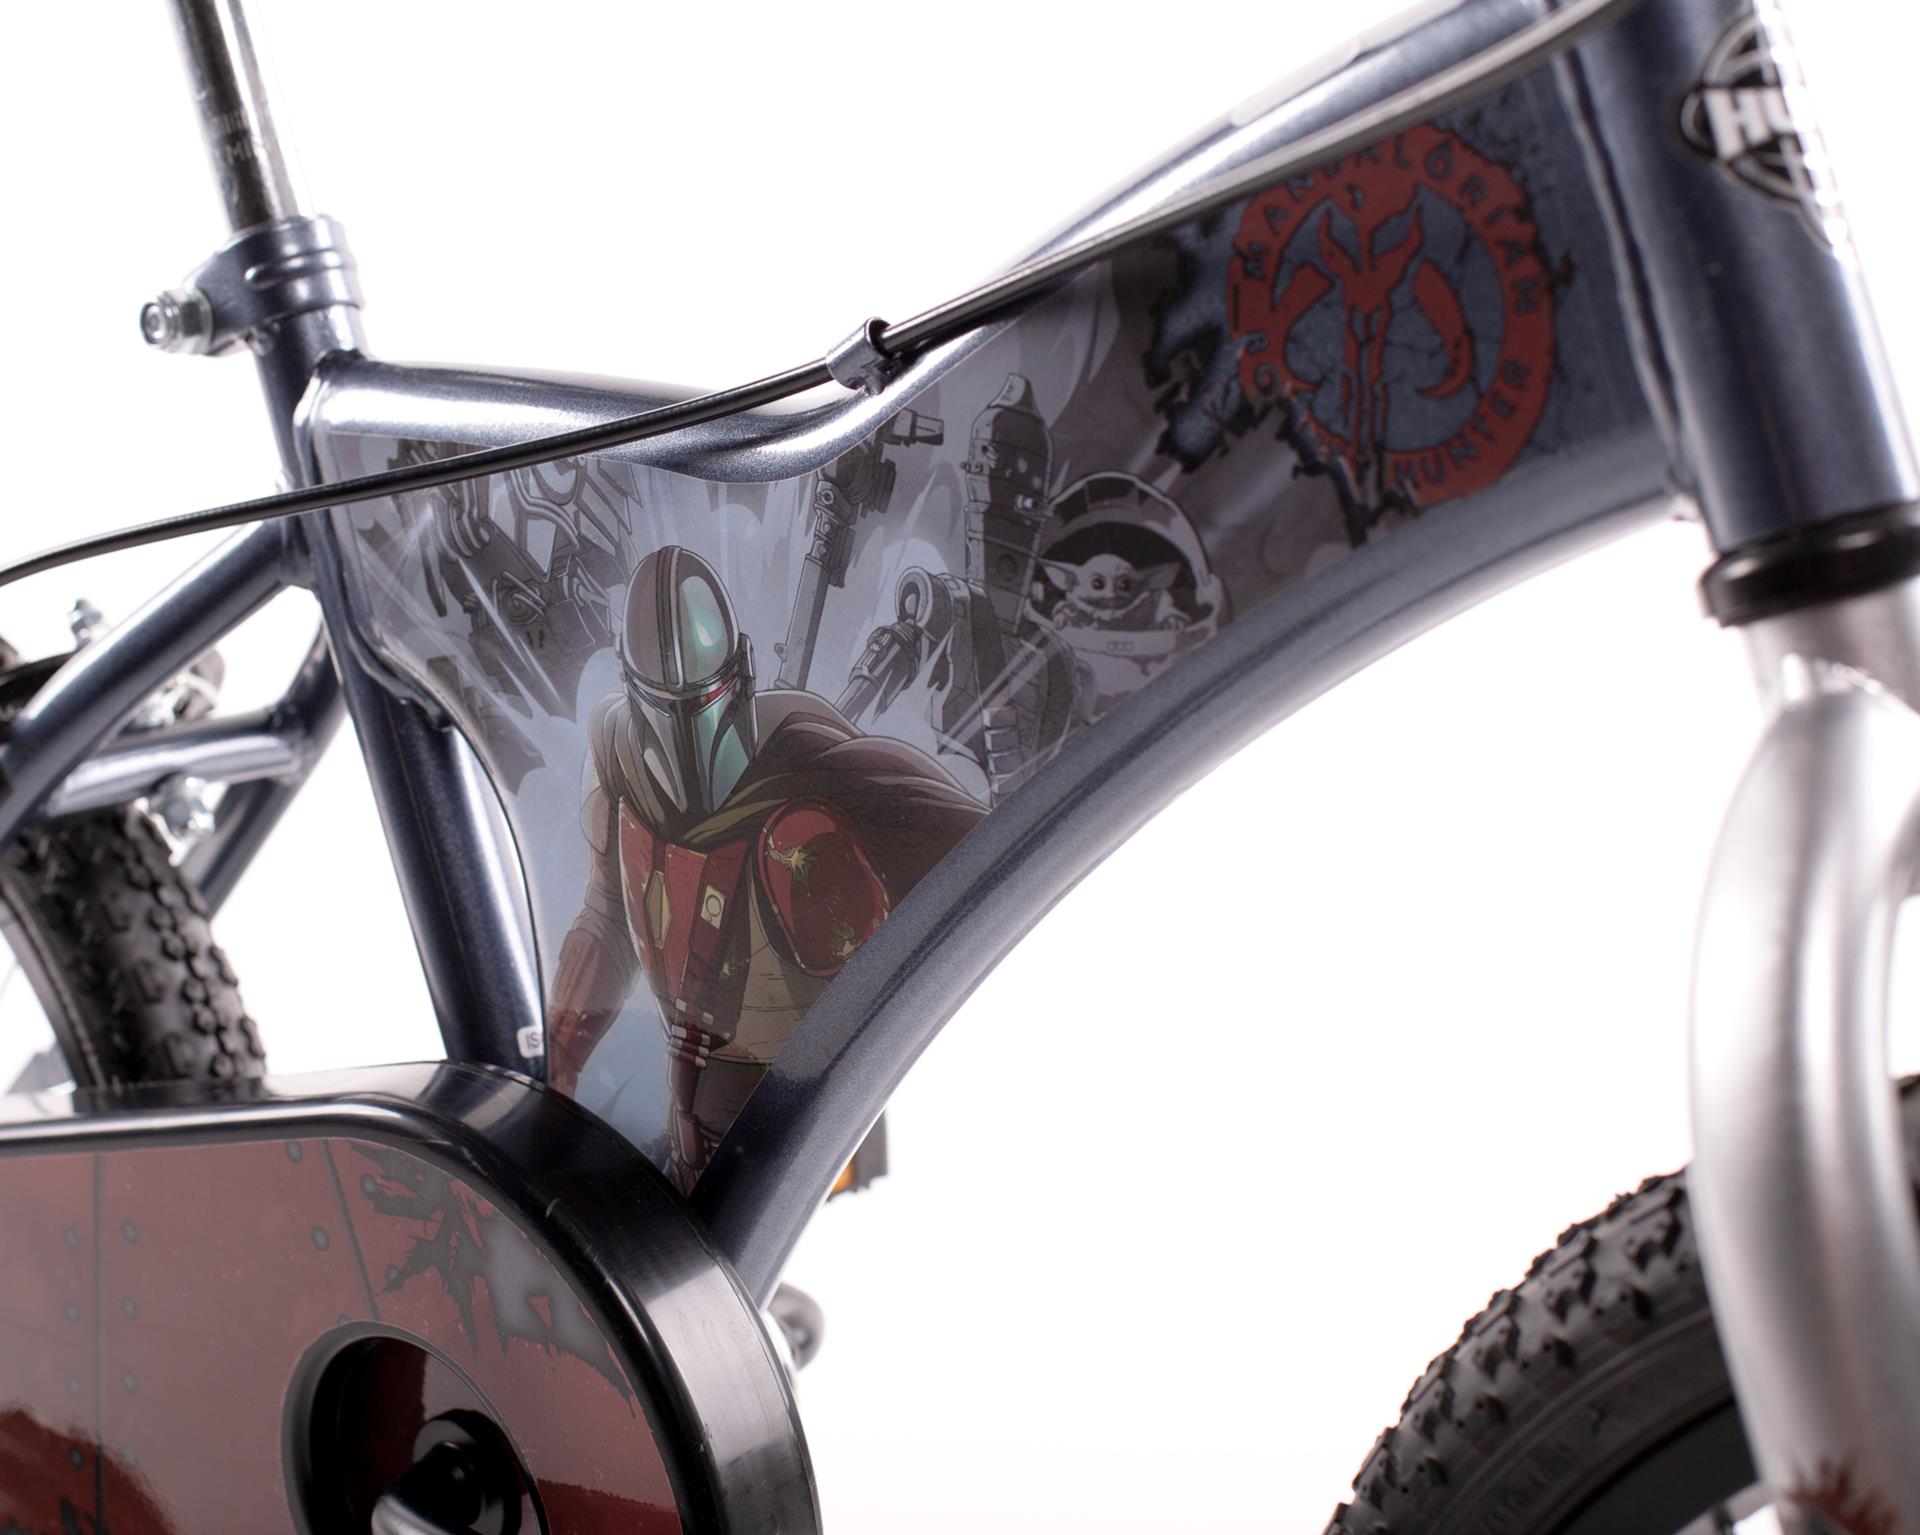 Huffy Star Wars 16" Детский велосипед